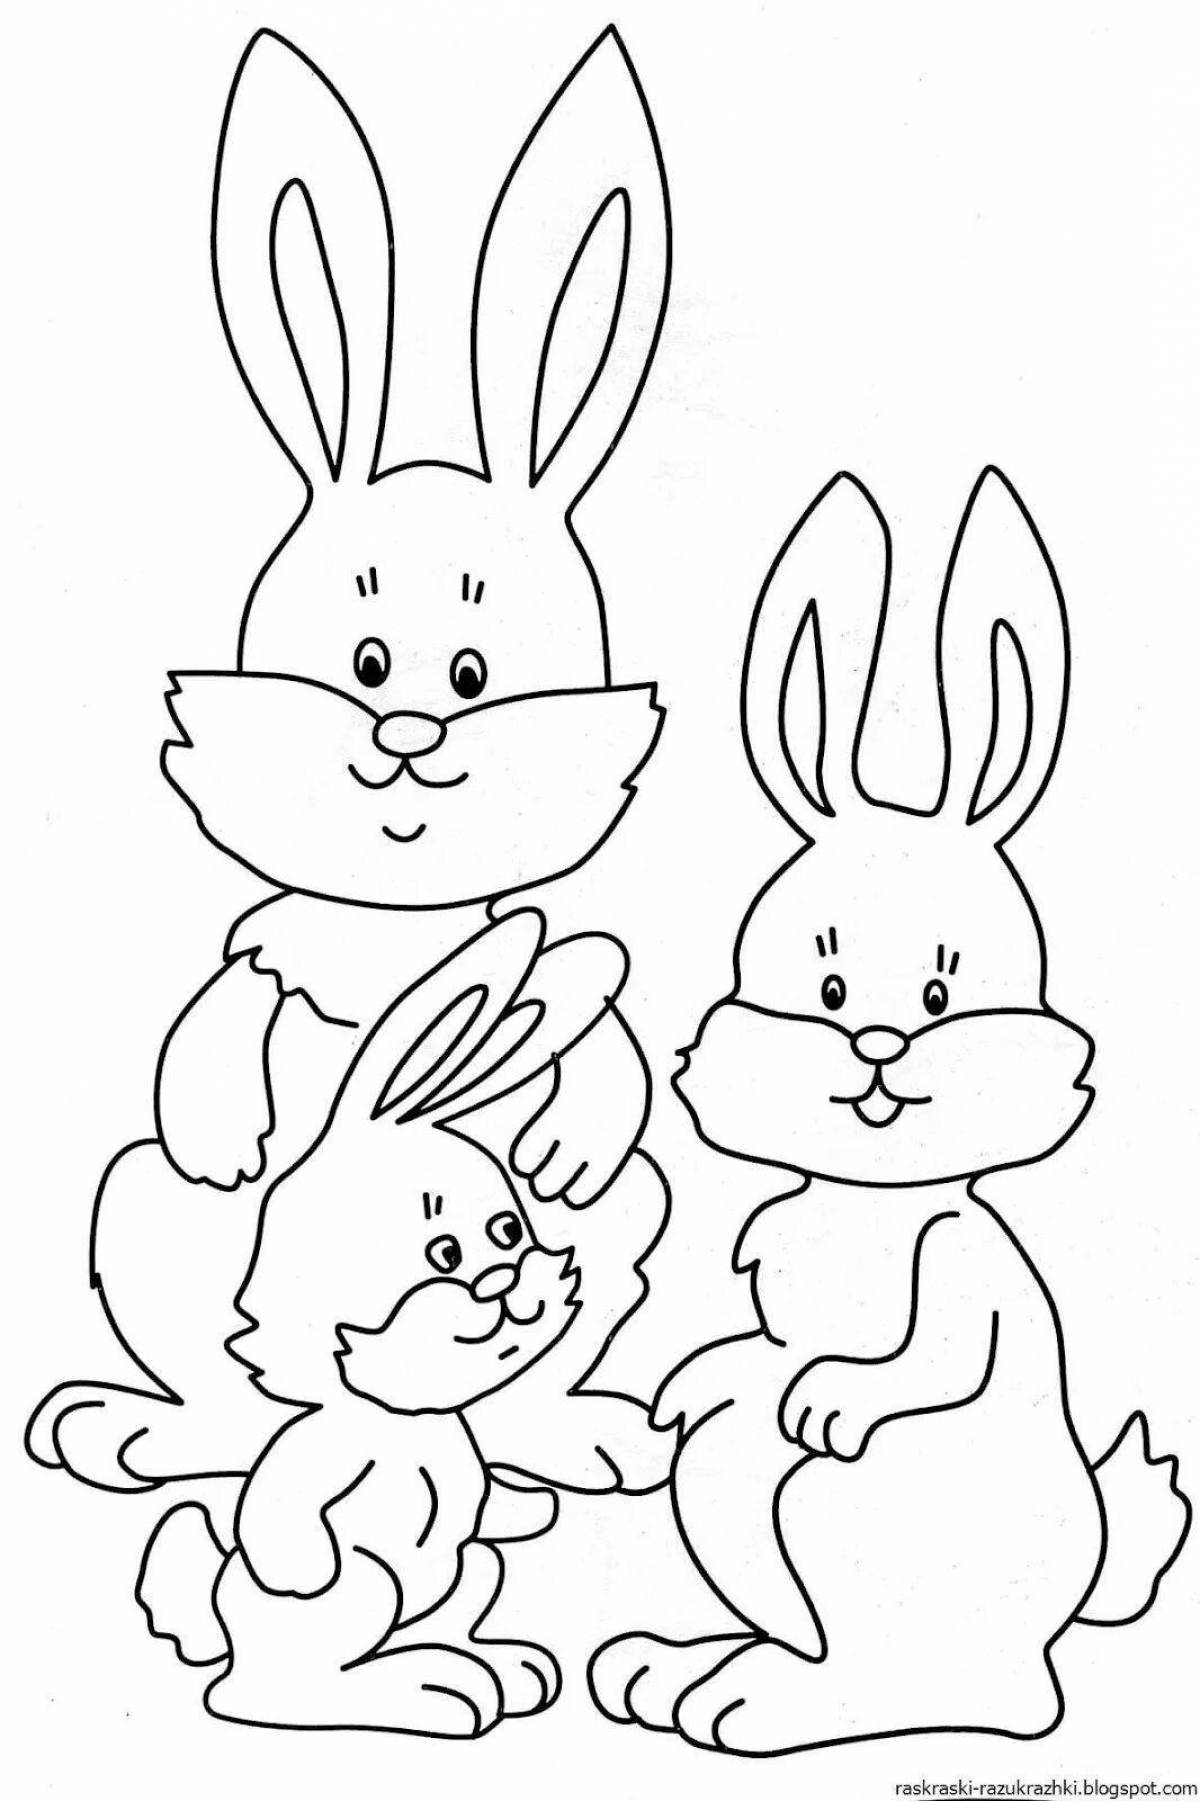 Fun bunny drawing for kids